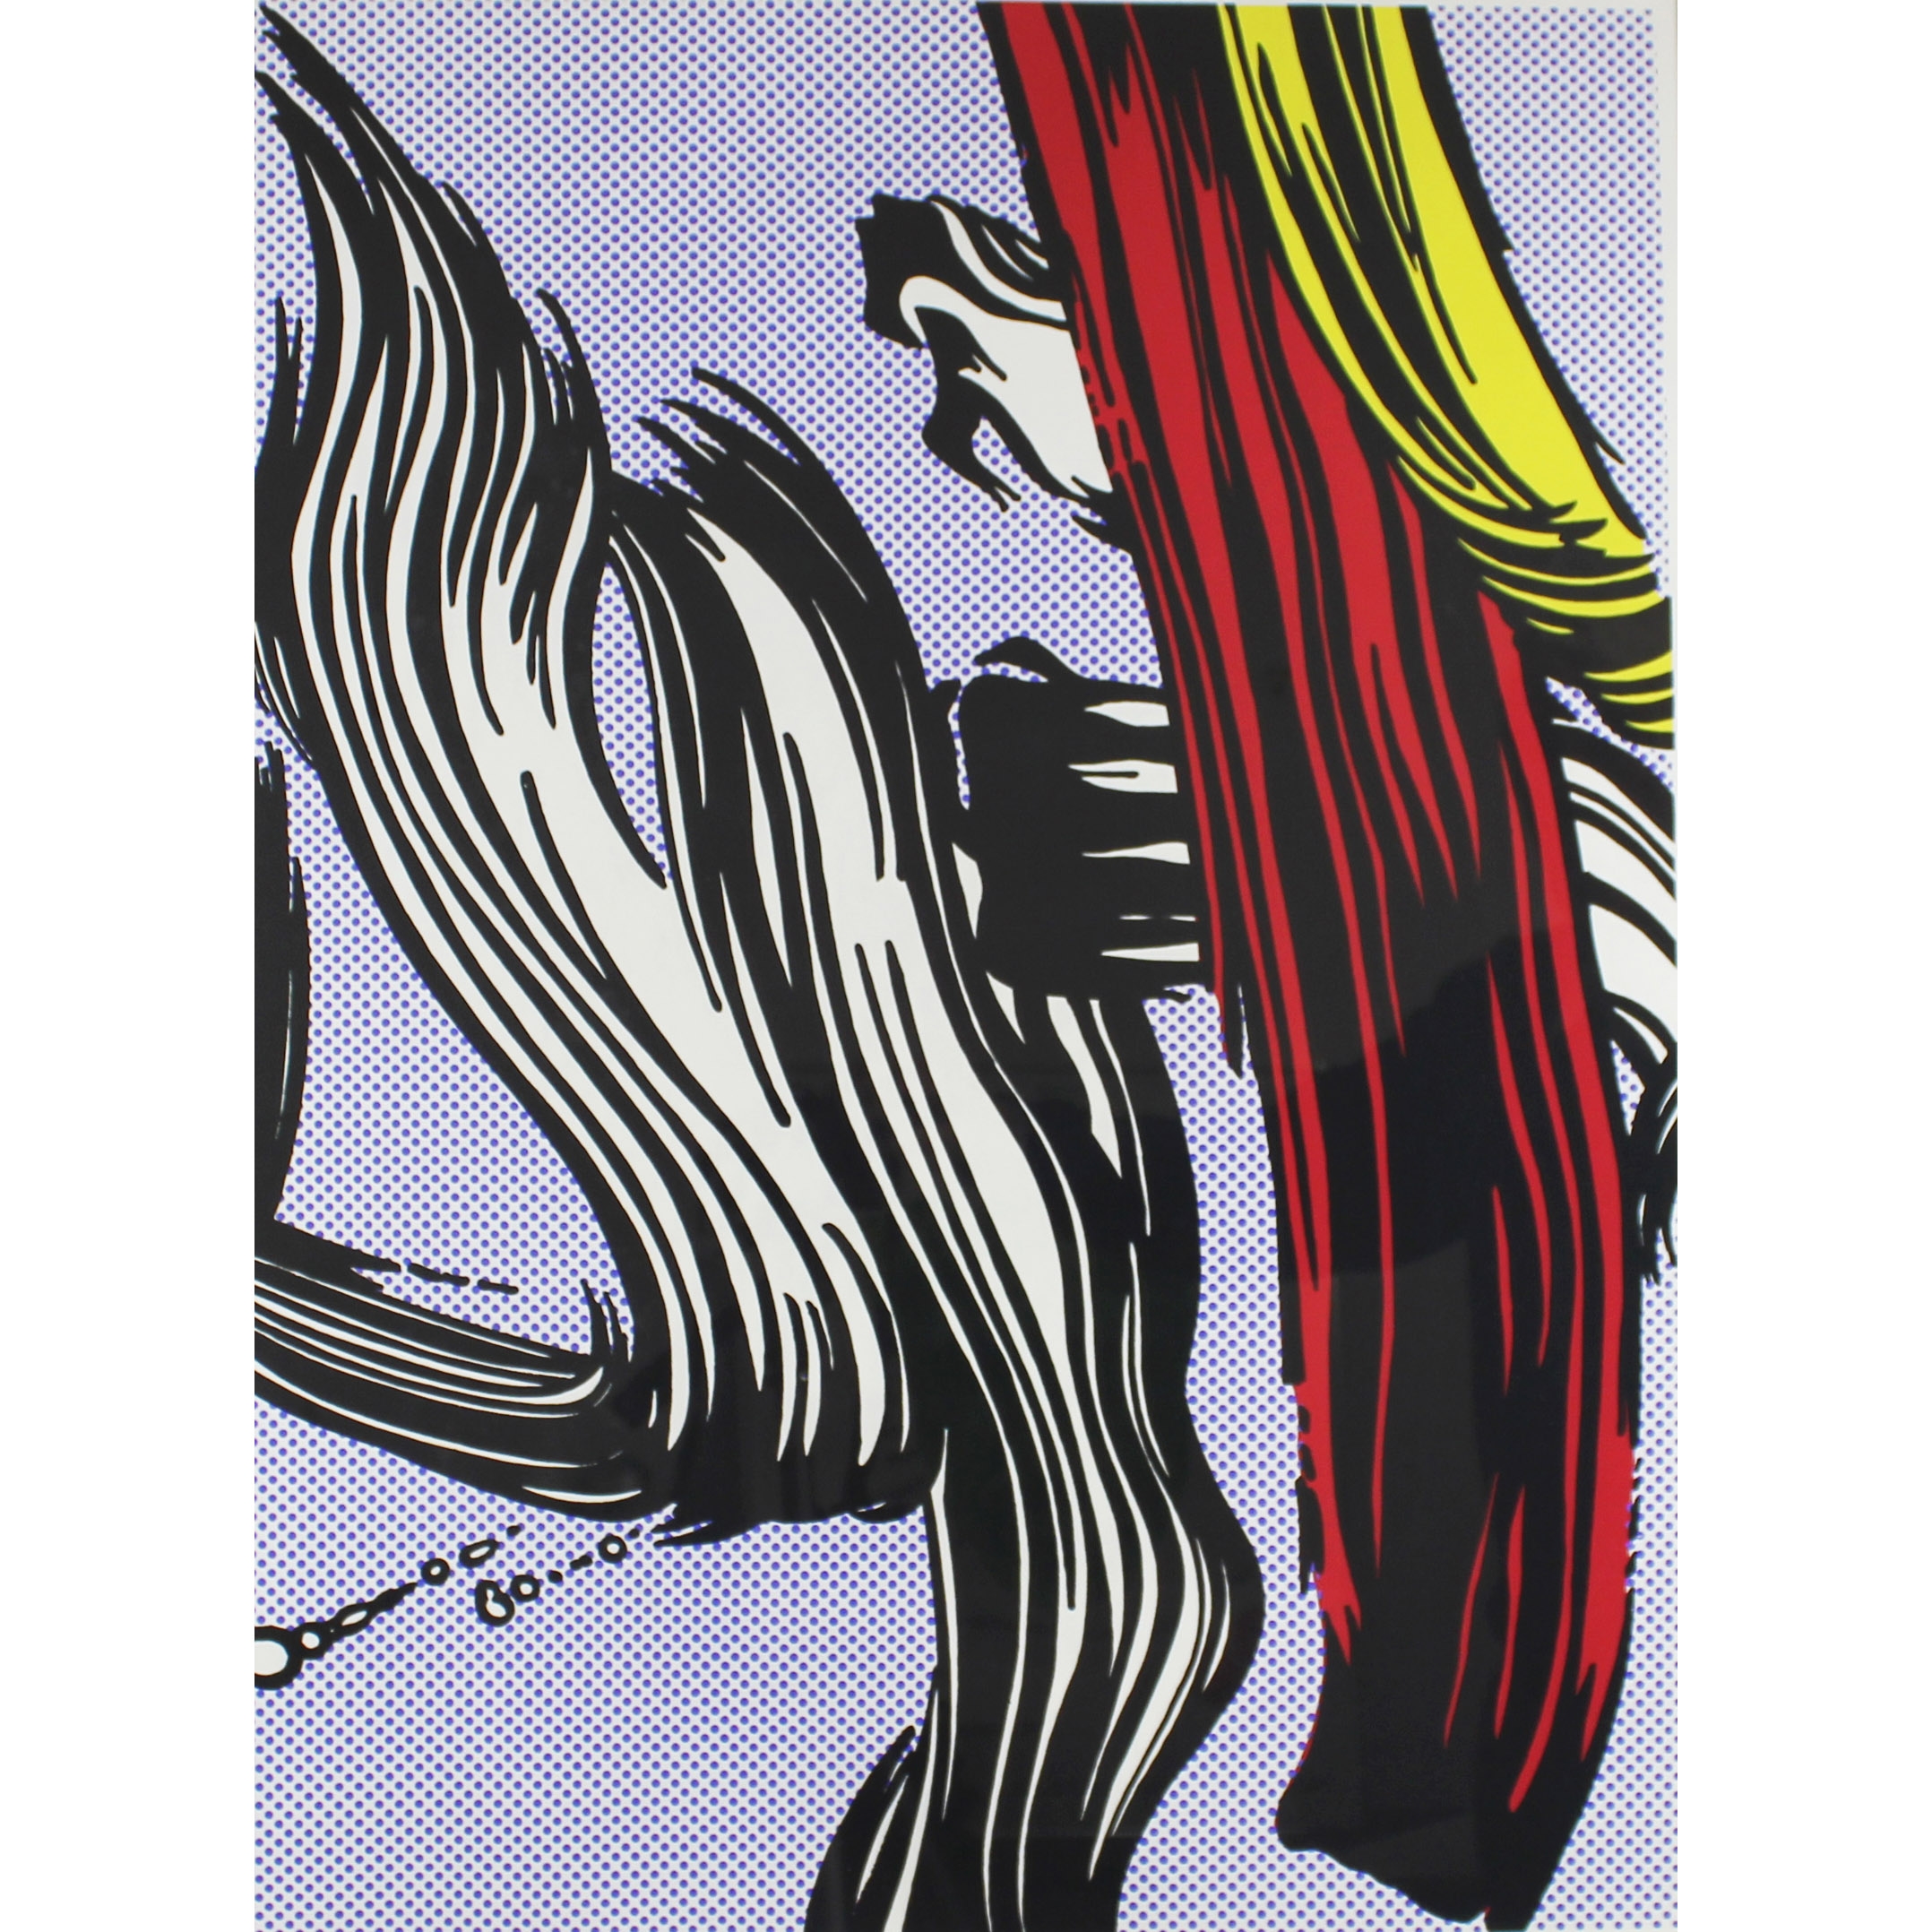 Artwork by Roy Lichtenstein, Brush Strokes, Made of Screenprint